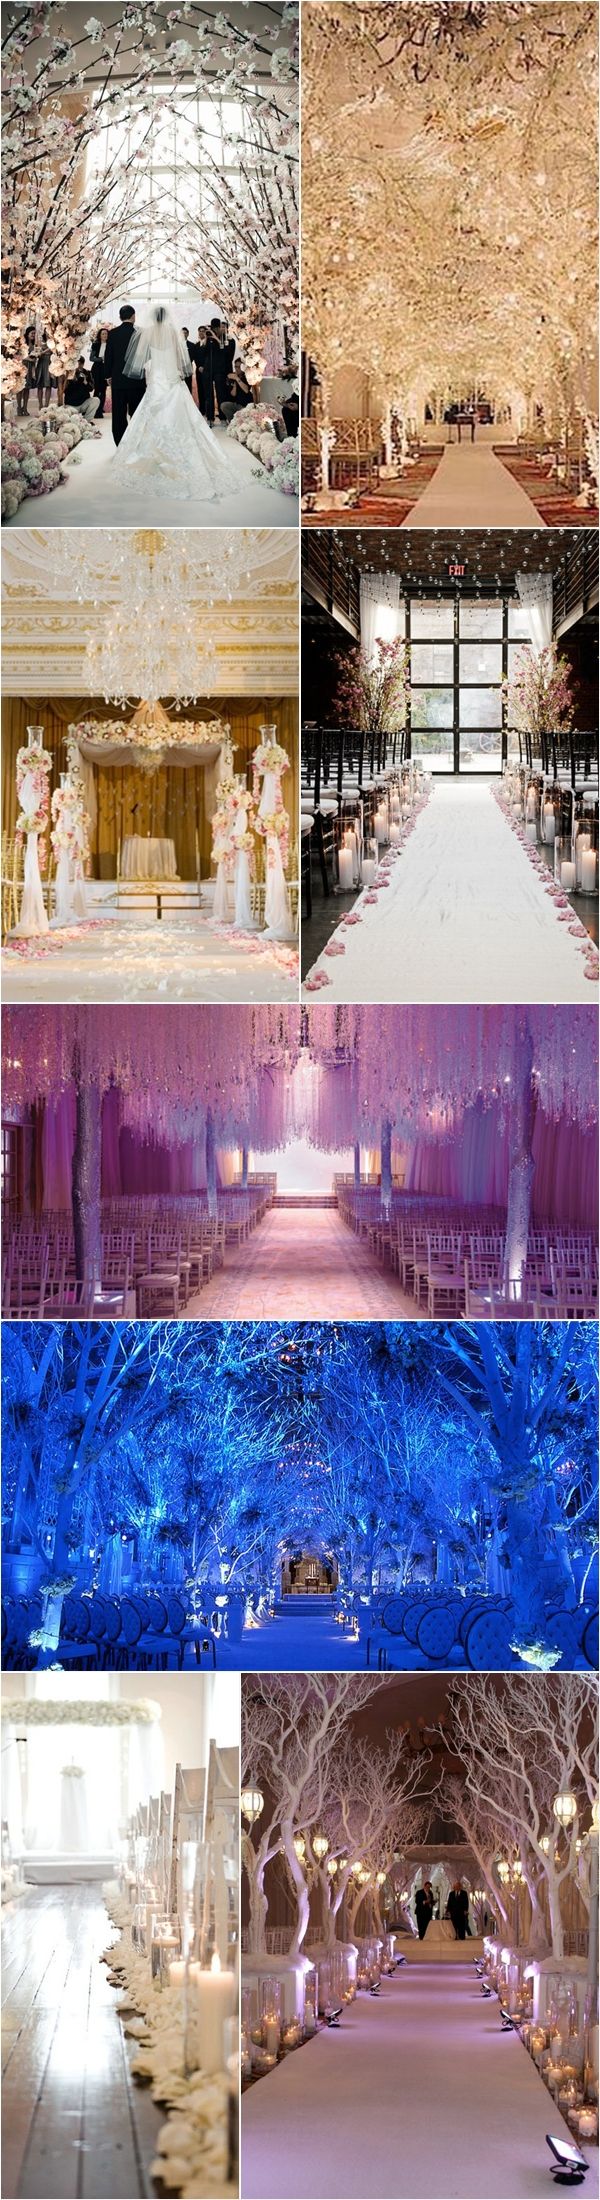 25 Romantic Winter Wedding Aisle Dcor Ideas Deer Pearl Flowers